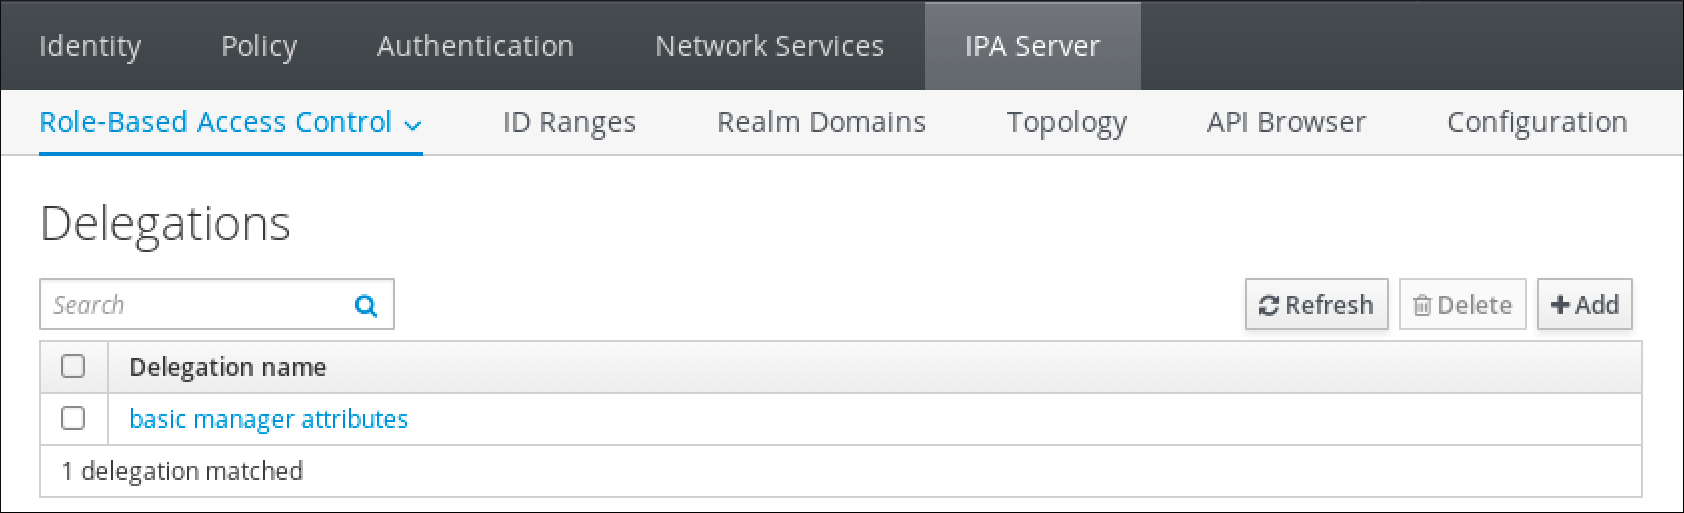 IdM Web UI 的屏幕截图，显示了"IPA Server"选项卡的"Role-Based Access Control"子菜单中的"Delegations"页面。有一个表显示了按其"Delegation name"组织的委派。